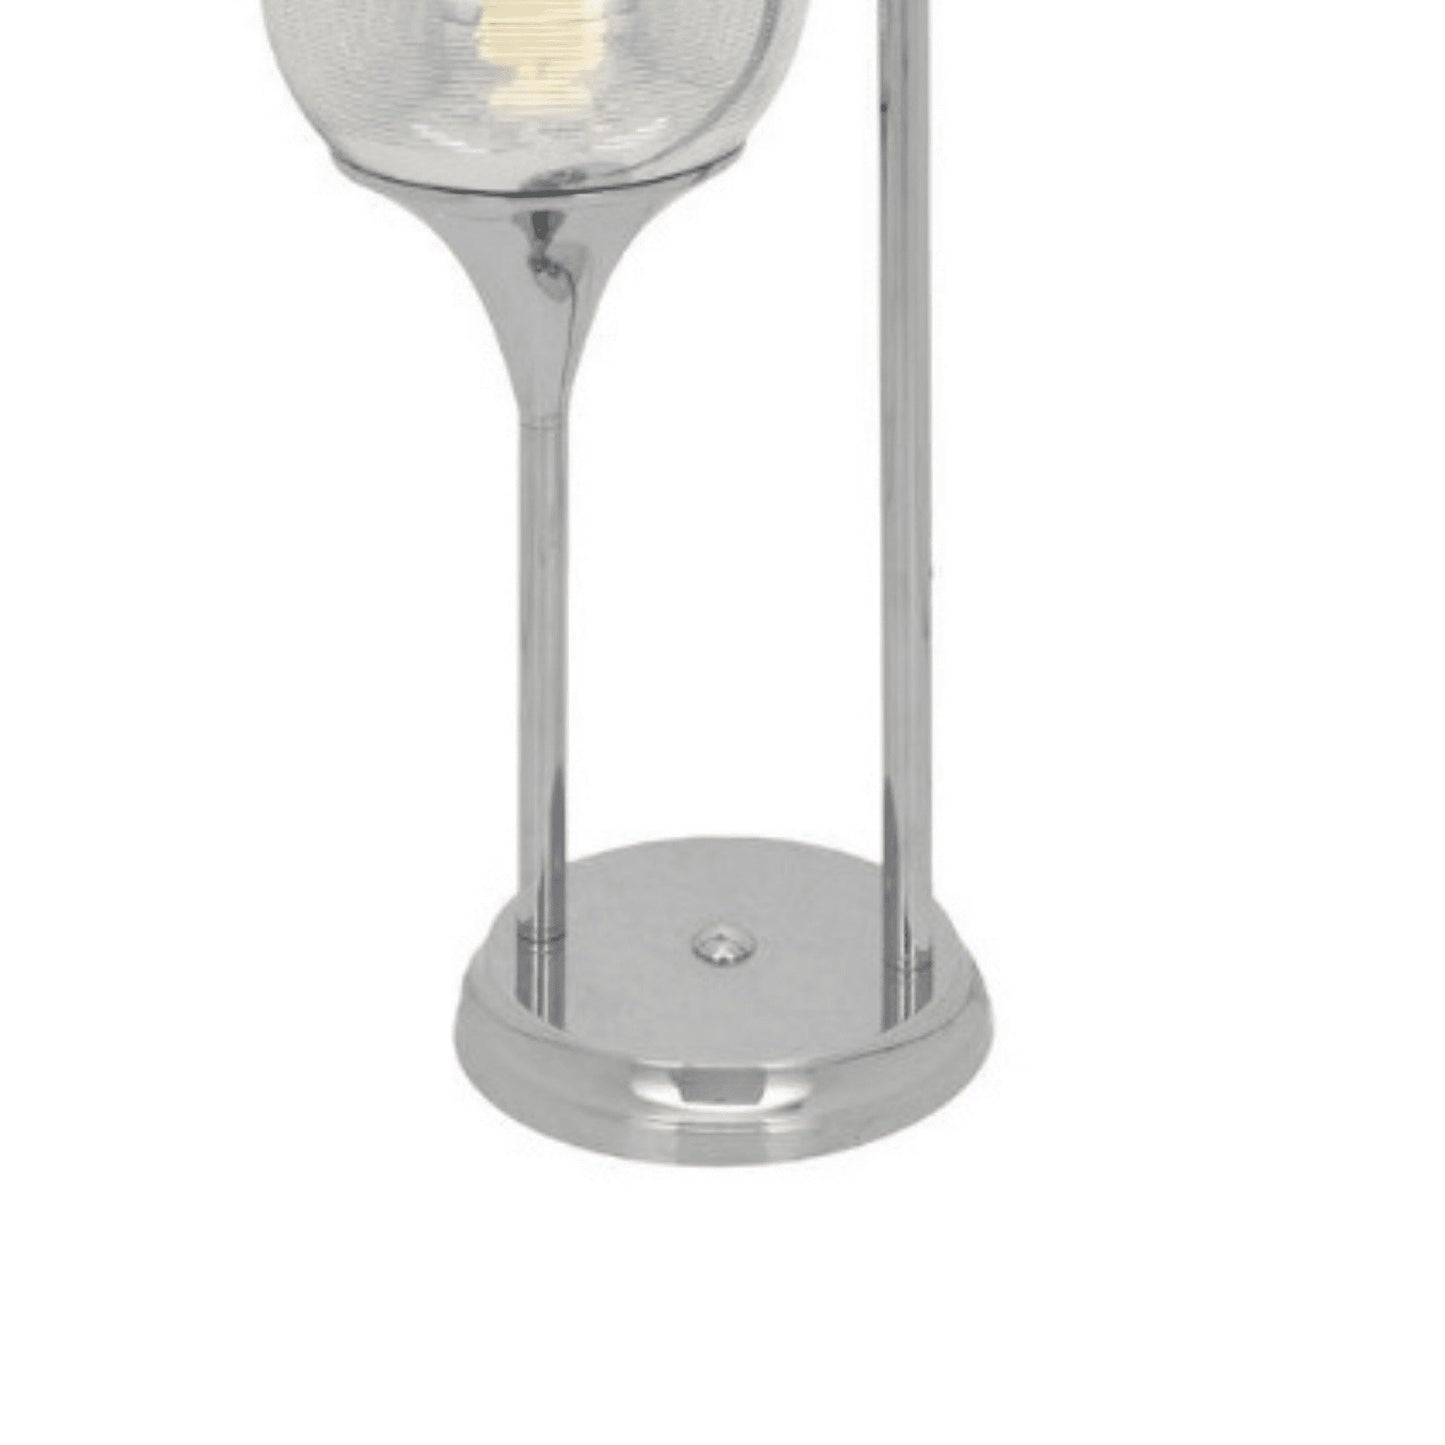 ISTANBUl Chrome Shades Table Lamp 2 Lights